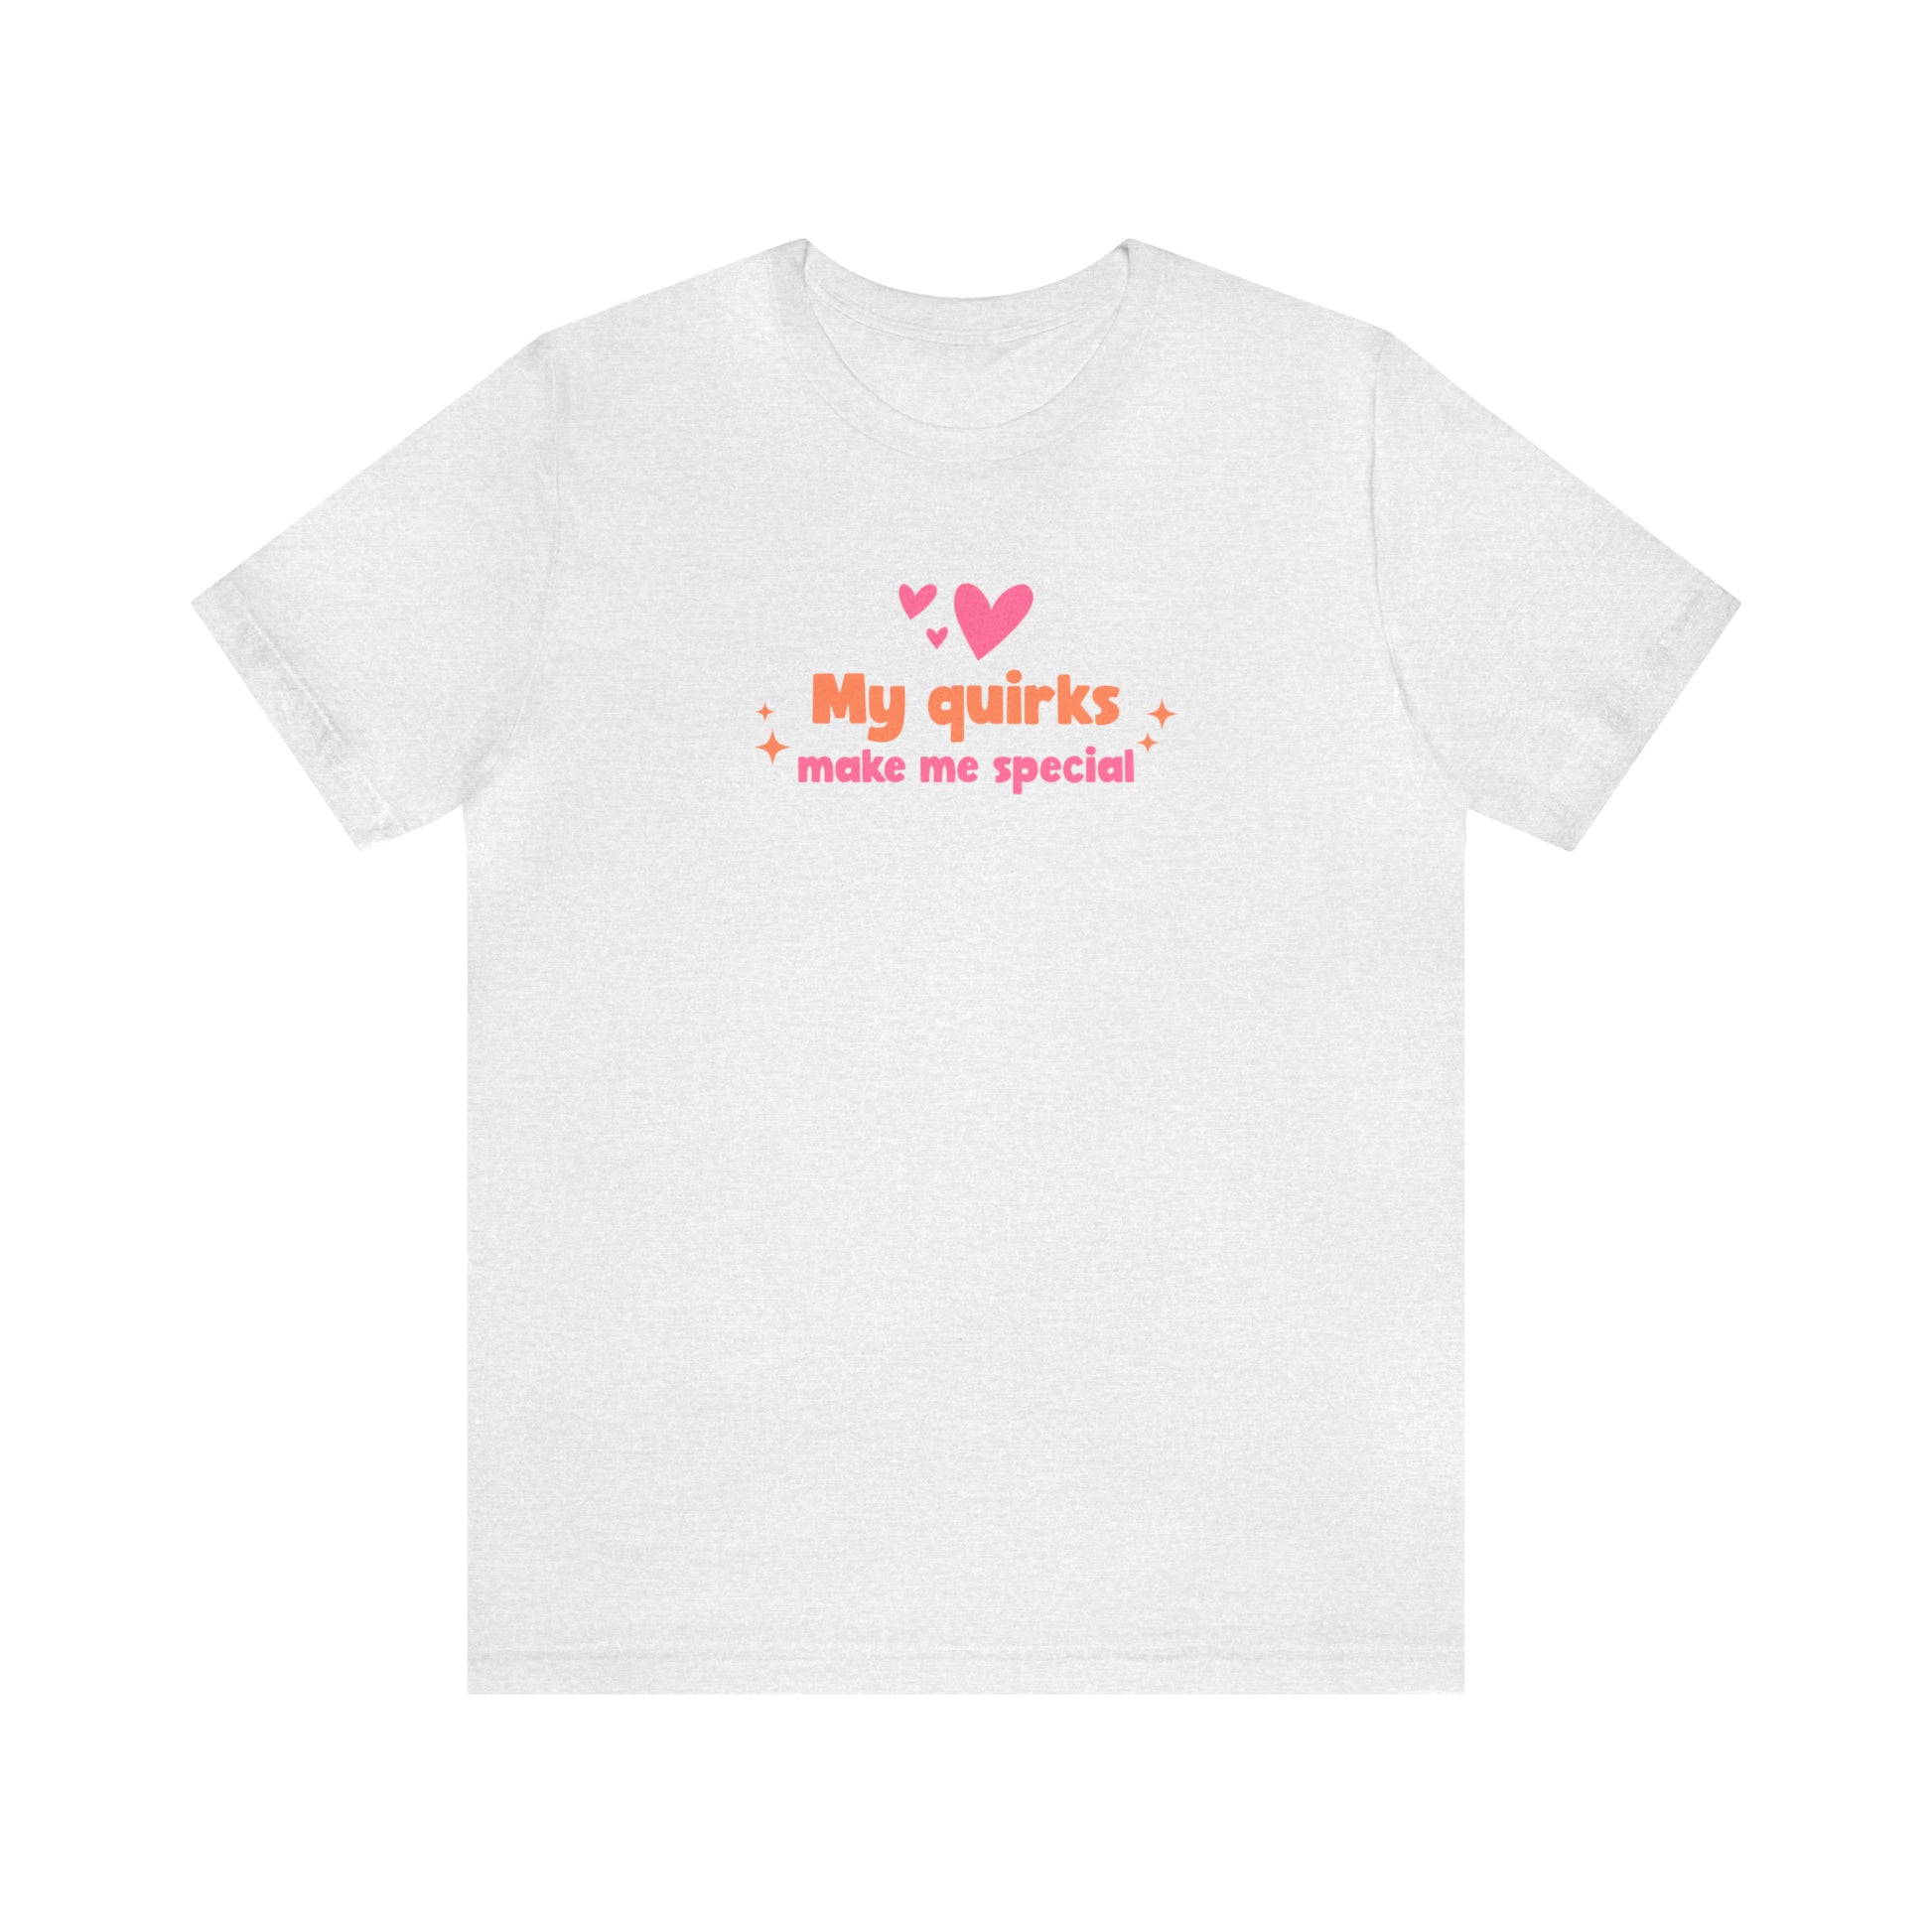 Quirky Tshirt for Women - Celebrate Neurodiversity Tee - Cute Neurodiversity Shirt - Embrace Your Diff